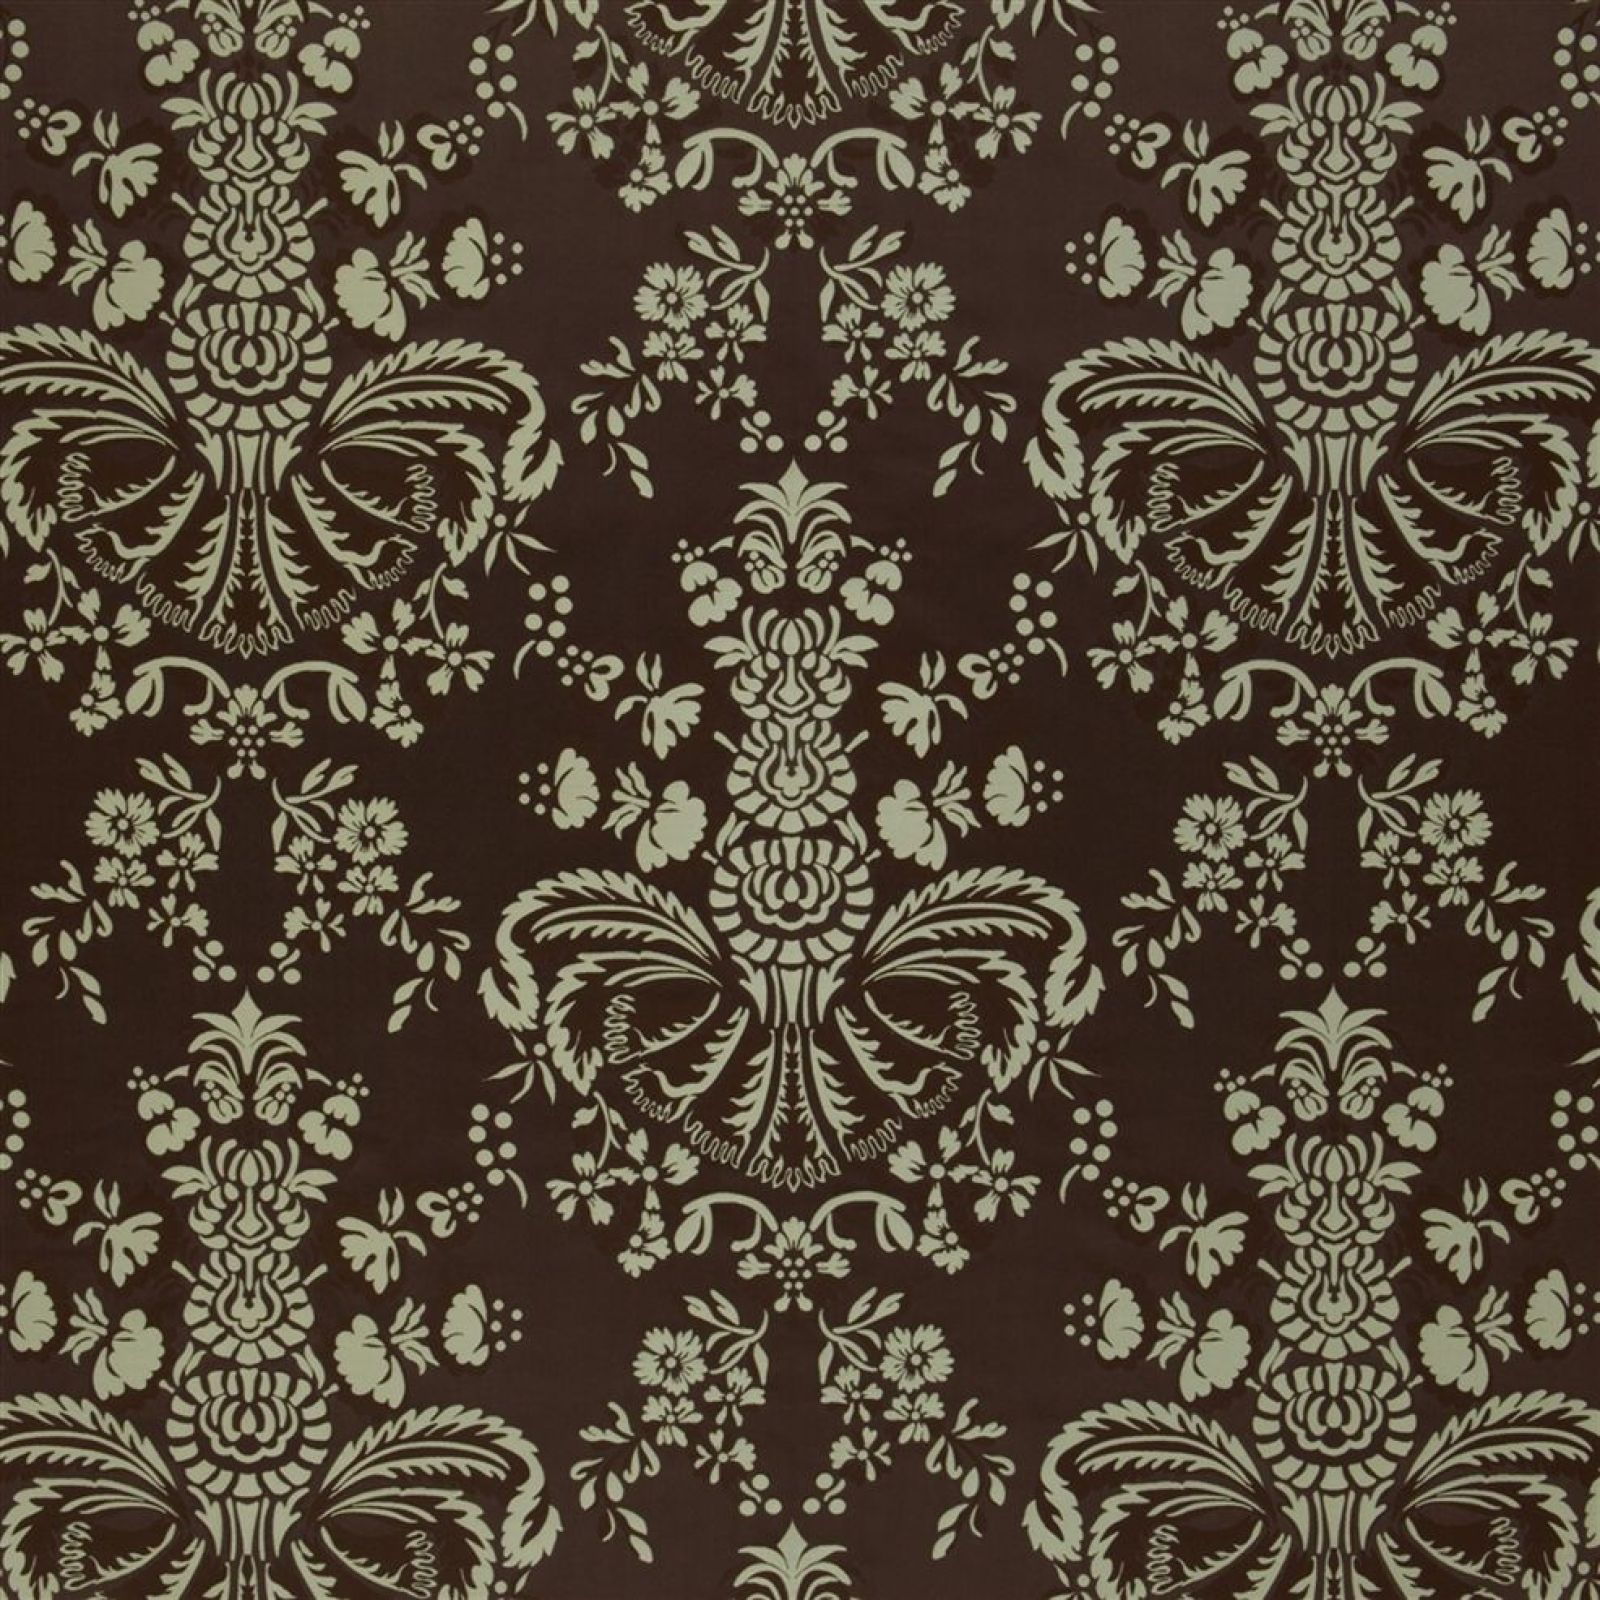 Briolette Fabric in Mahogany